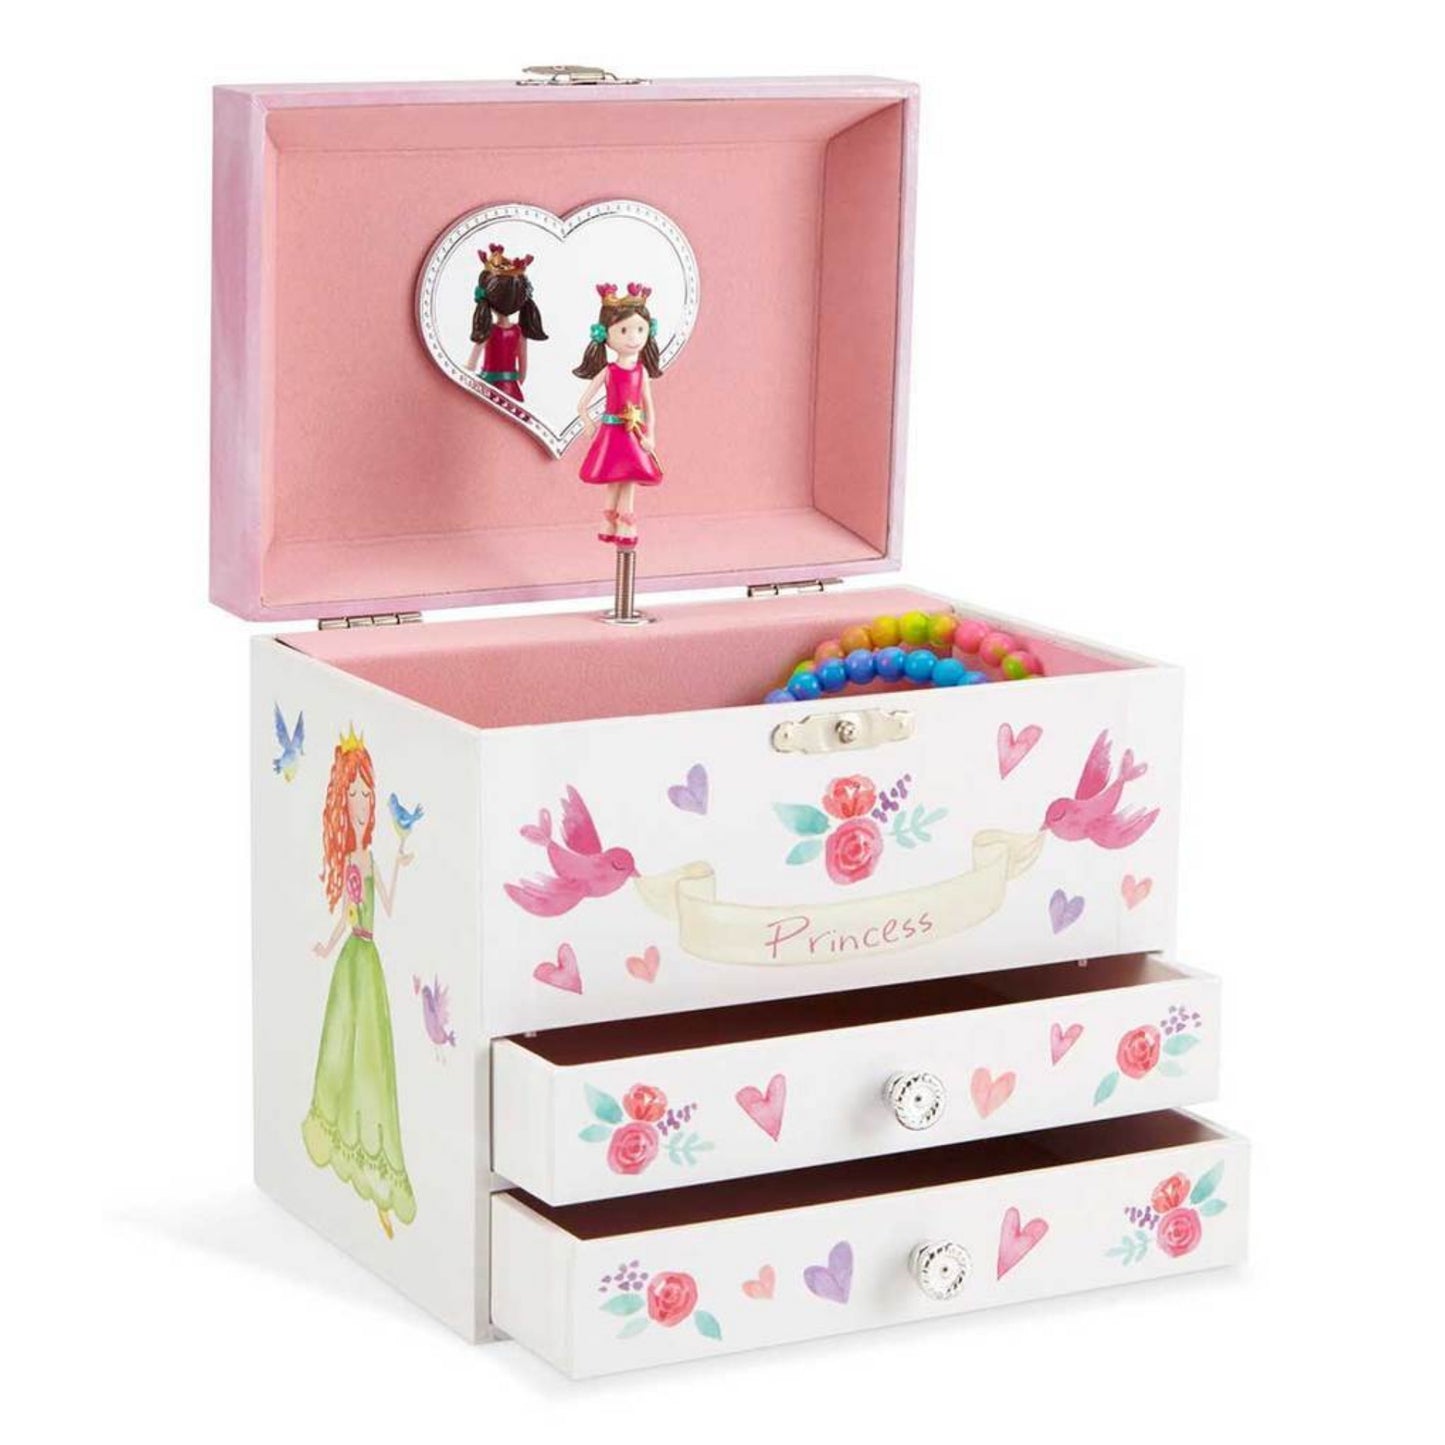 Princess Musical Jewelry Box with 2 Drawers